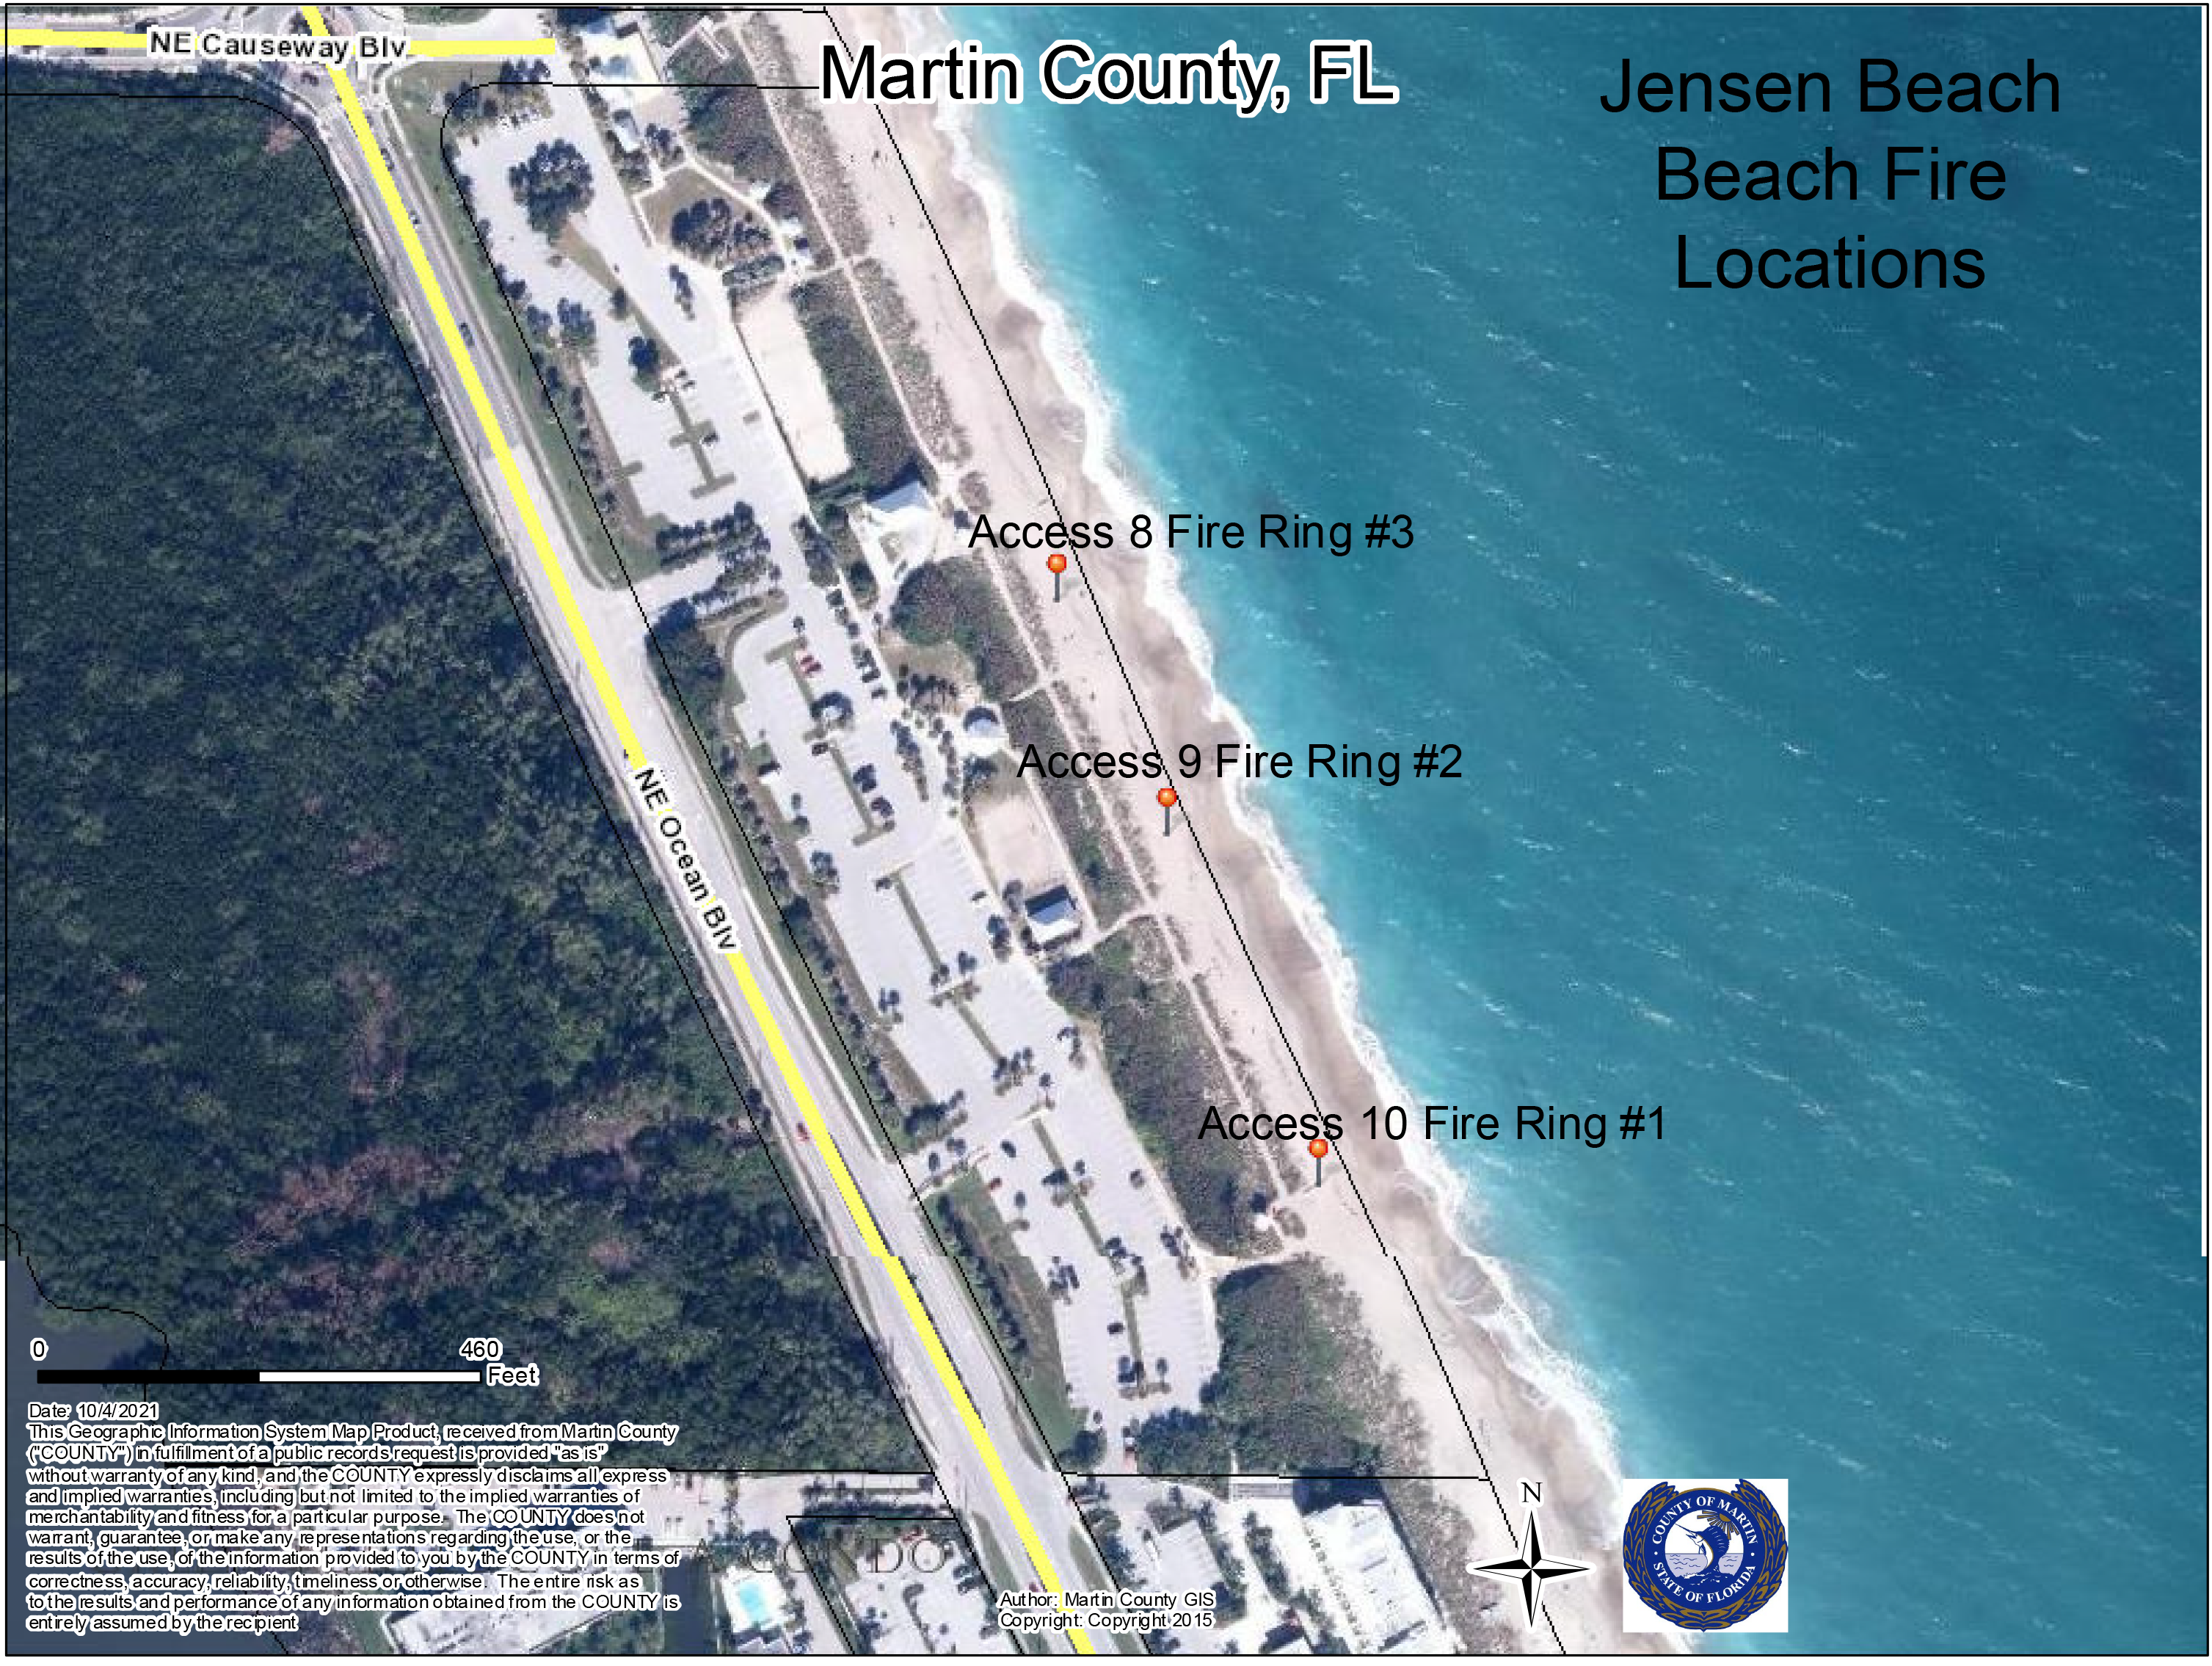 Jensen Beach Fire Pit Locations